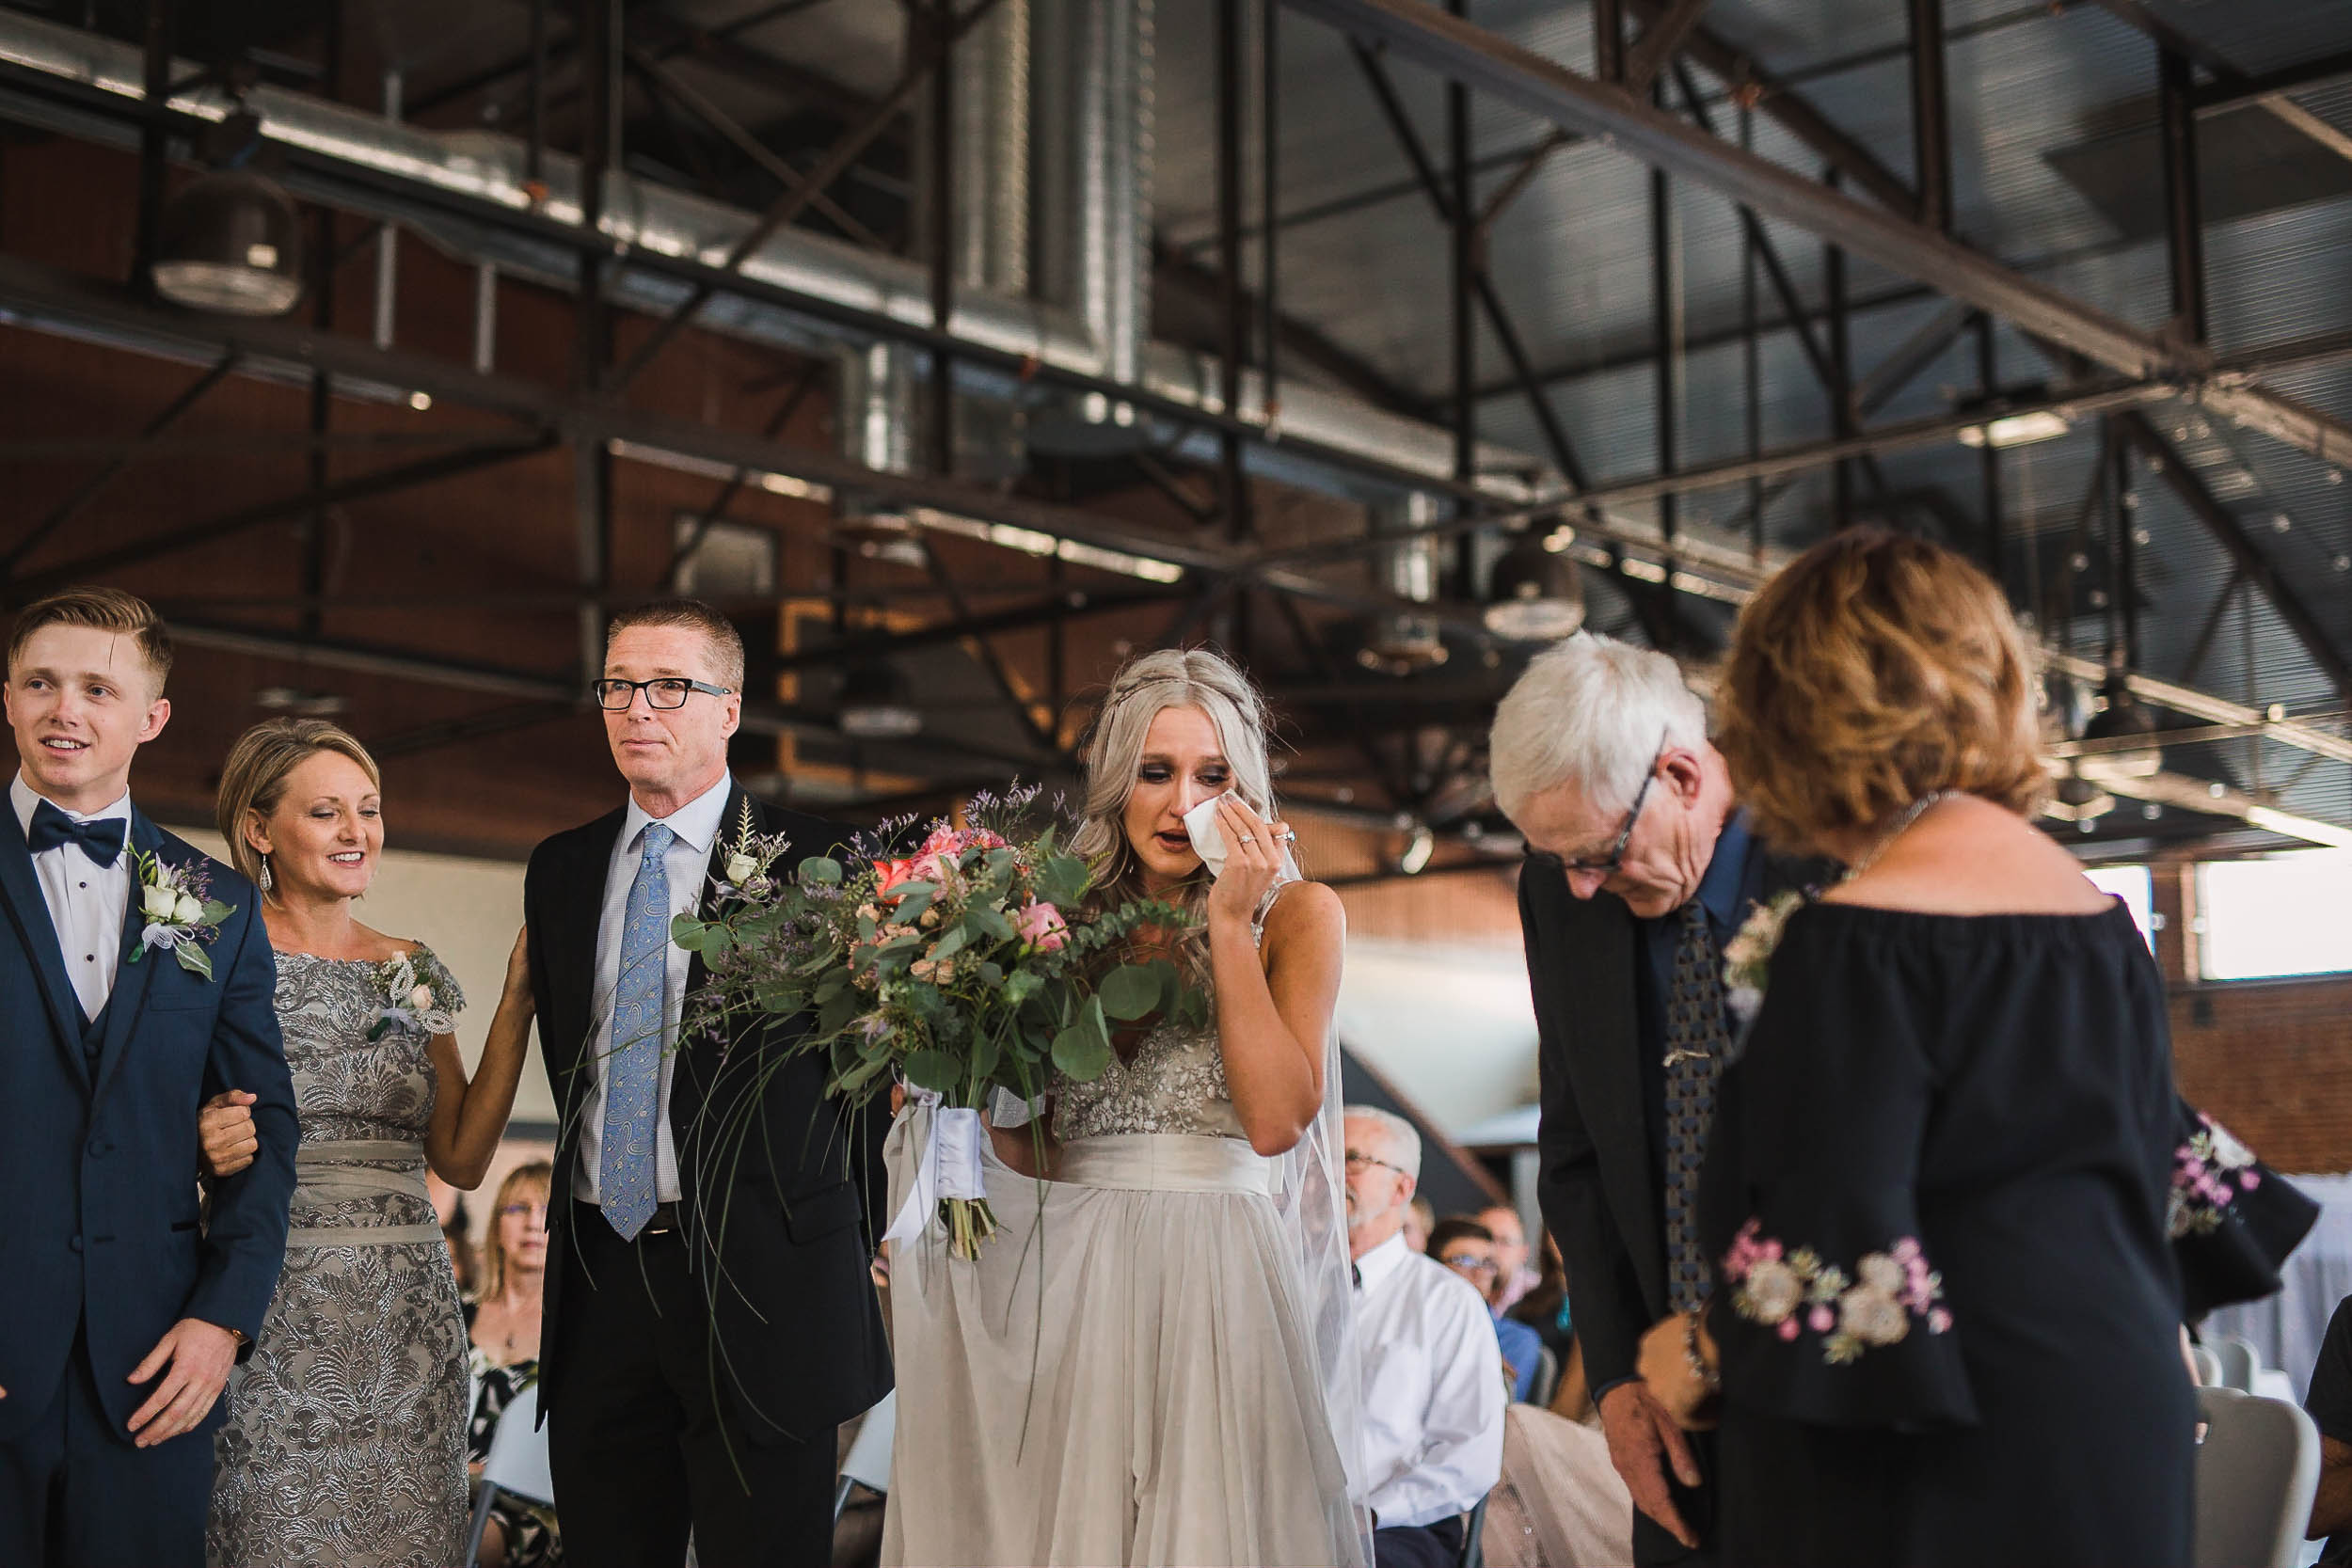 Emotional bride at wedding ceremony